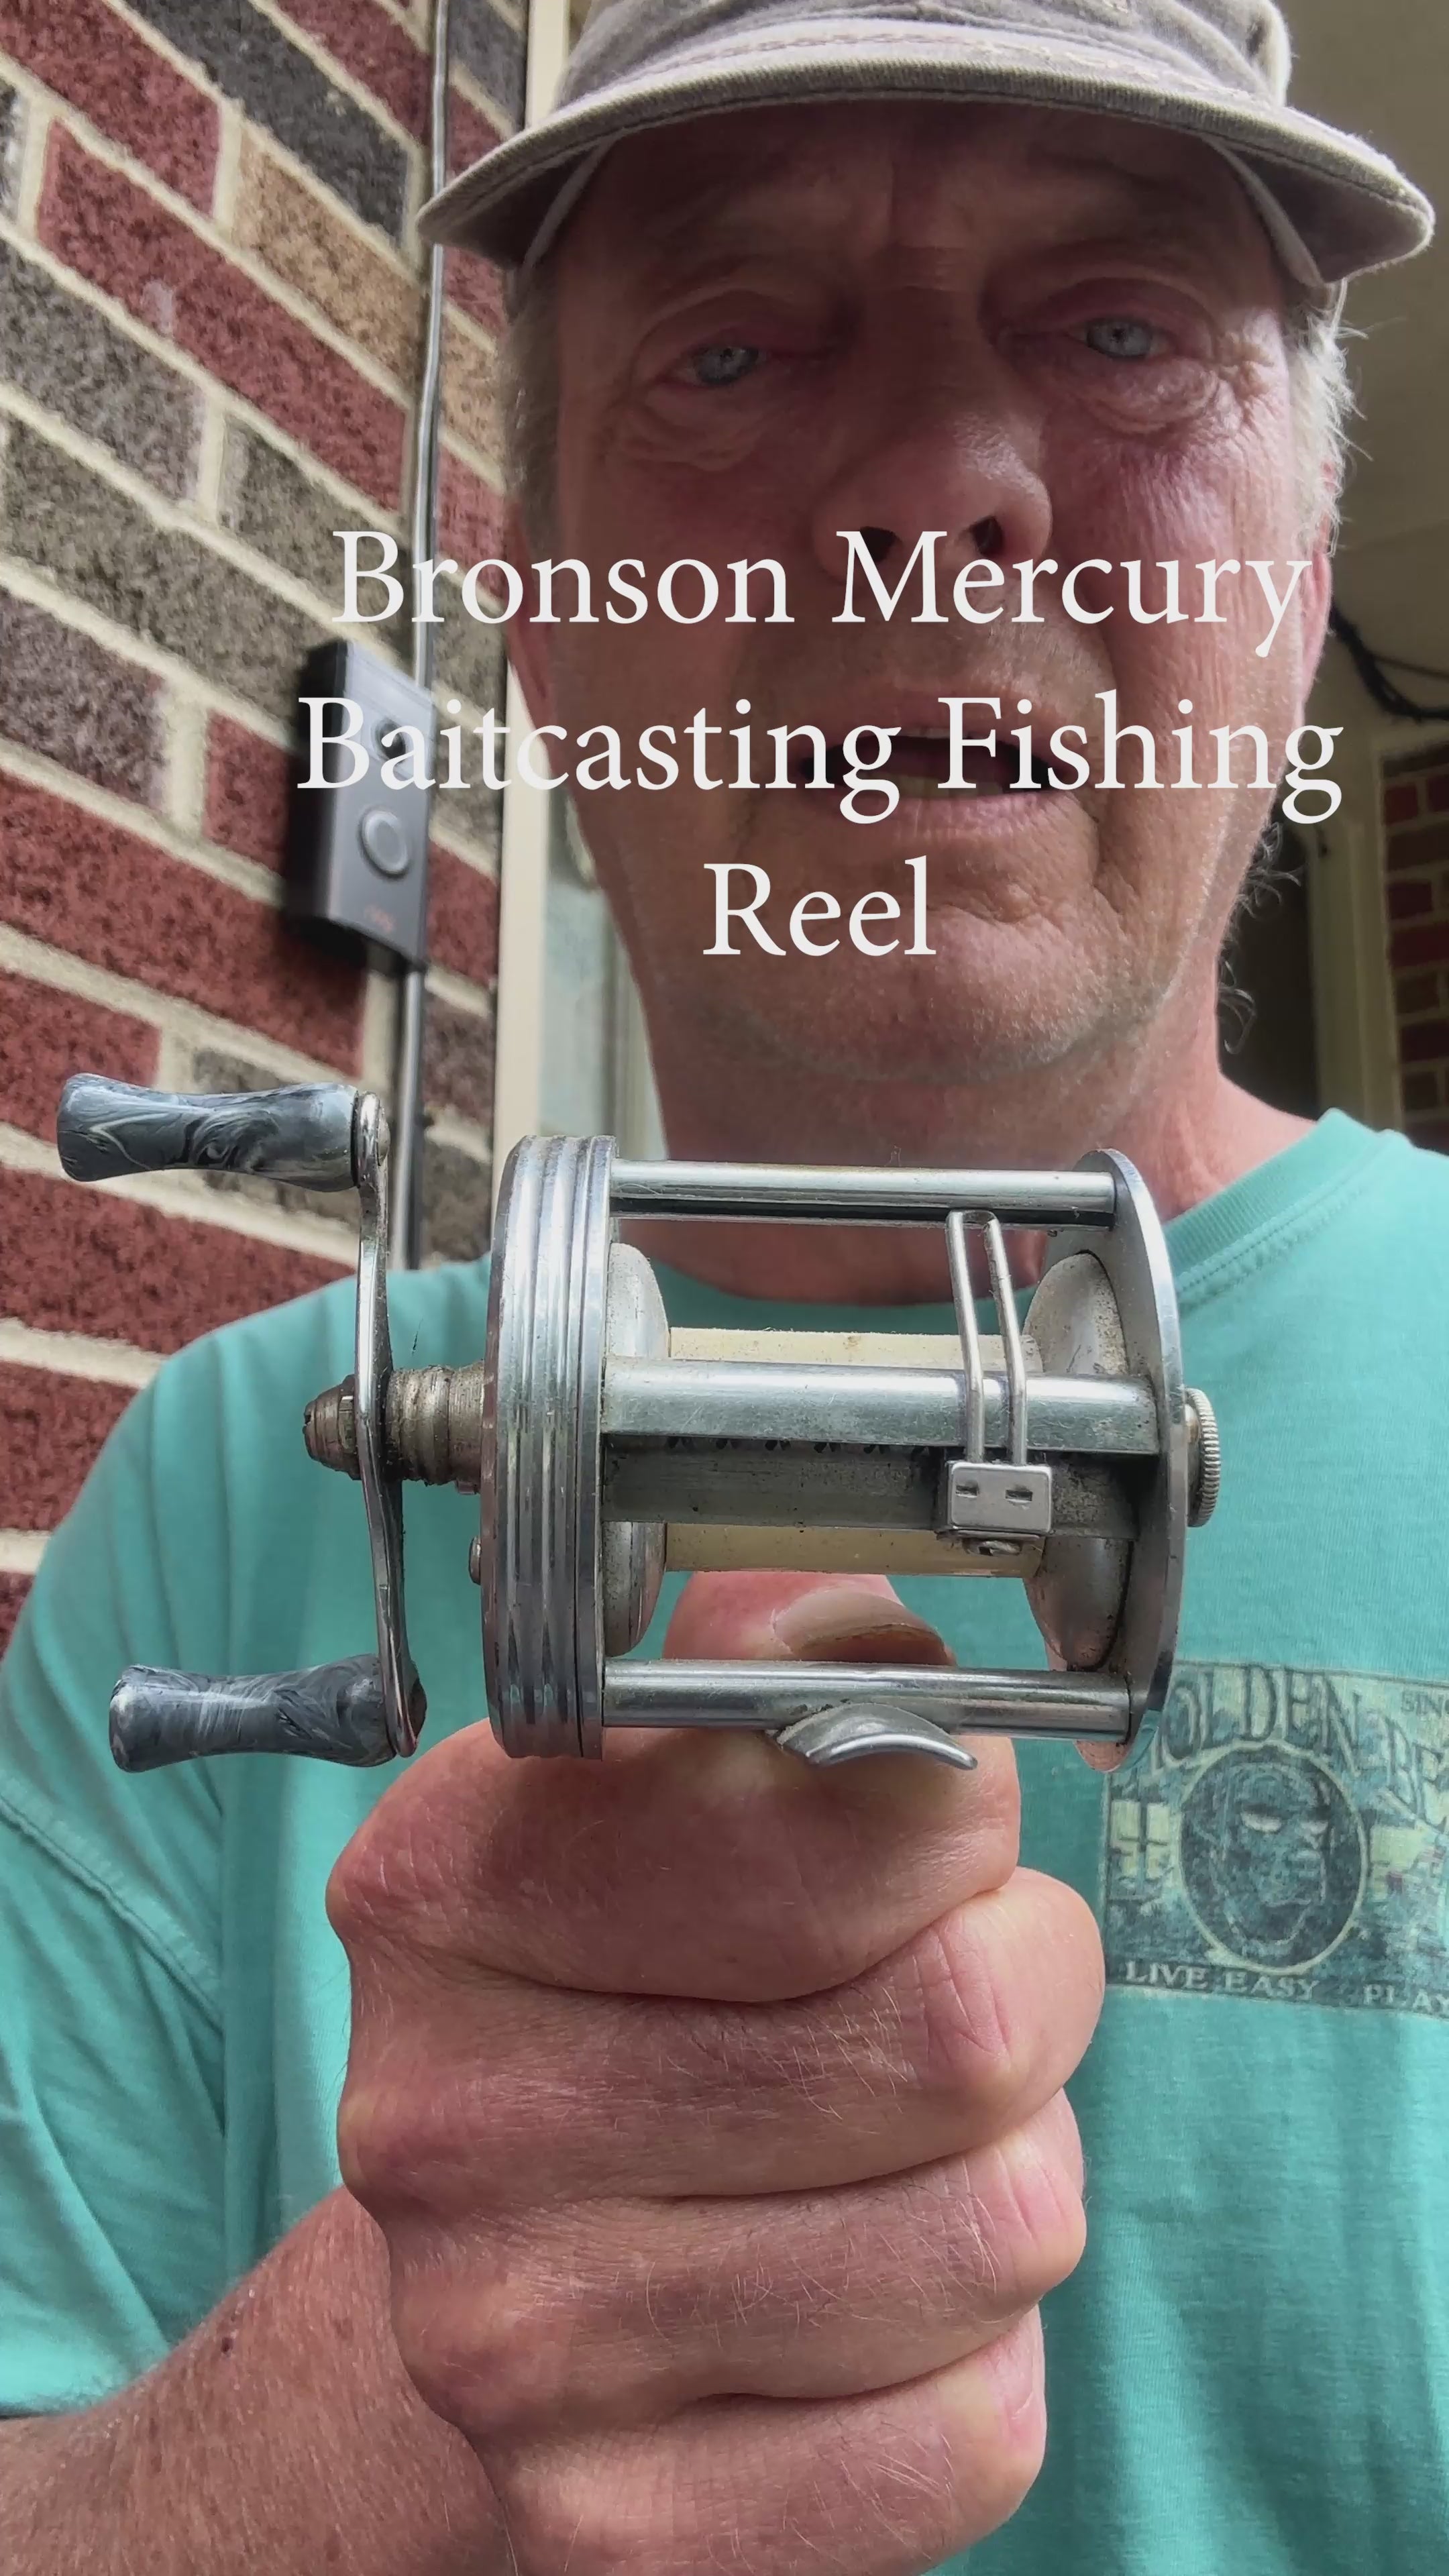 Vintage Bronson Mercury Casting Reel